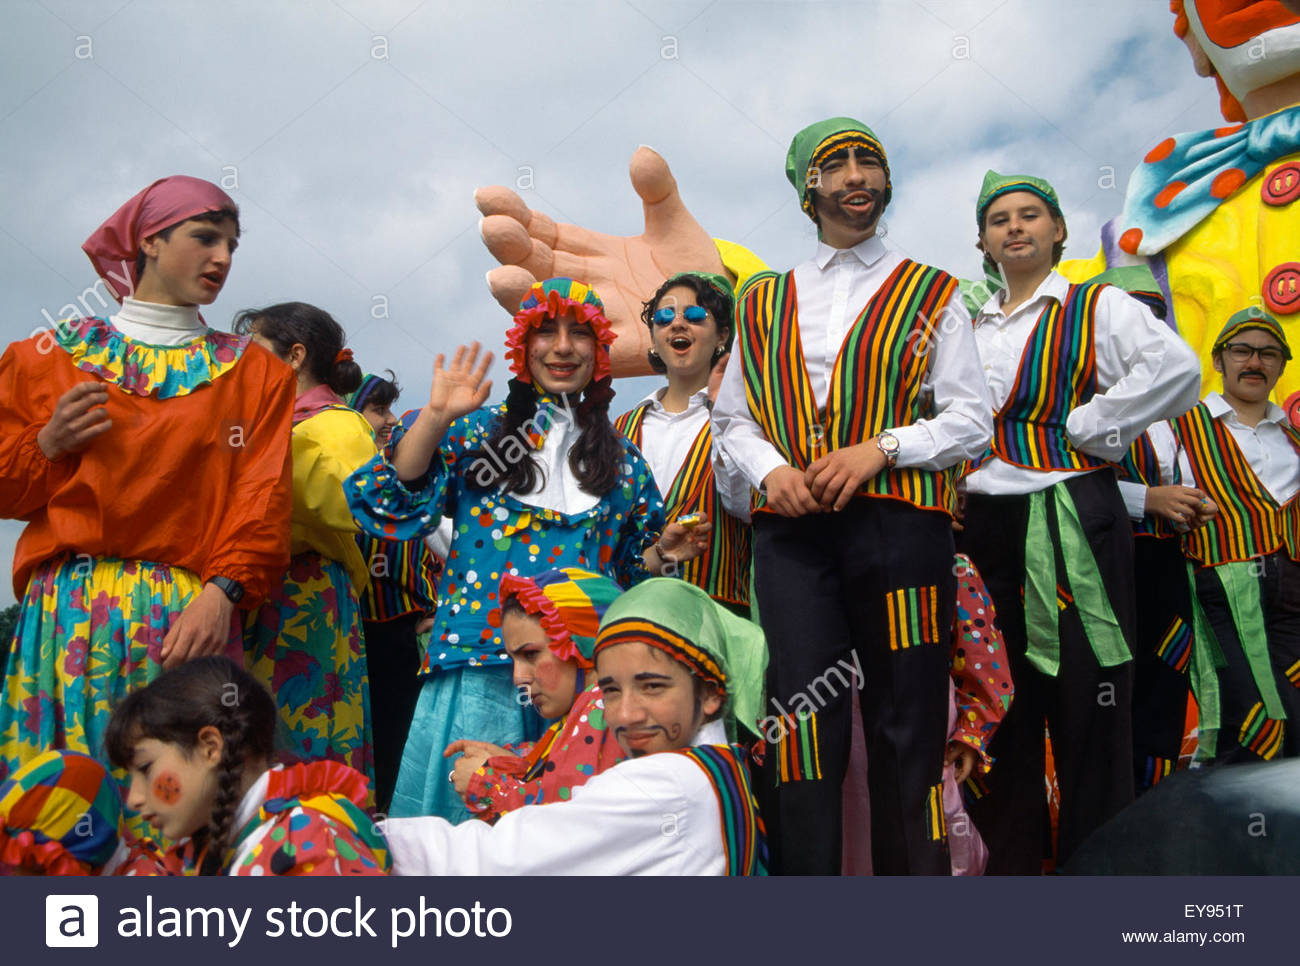 Valletta Malta Carnival People In Costume Stock Photo: 85638724 - Alamy